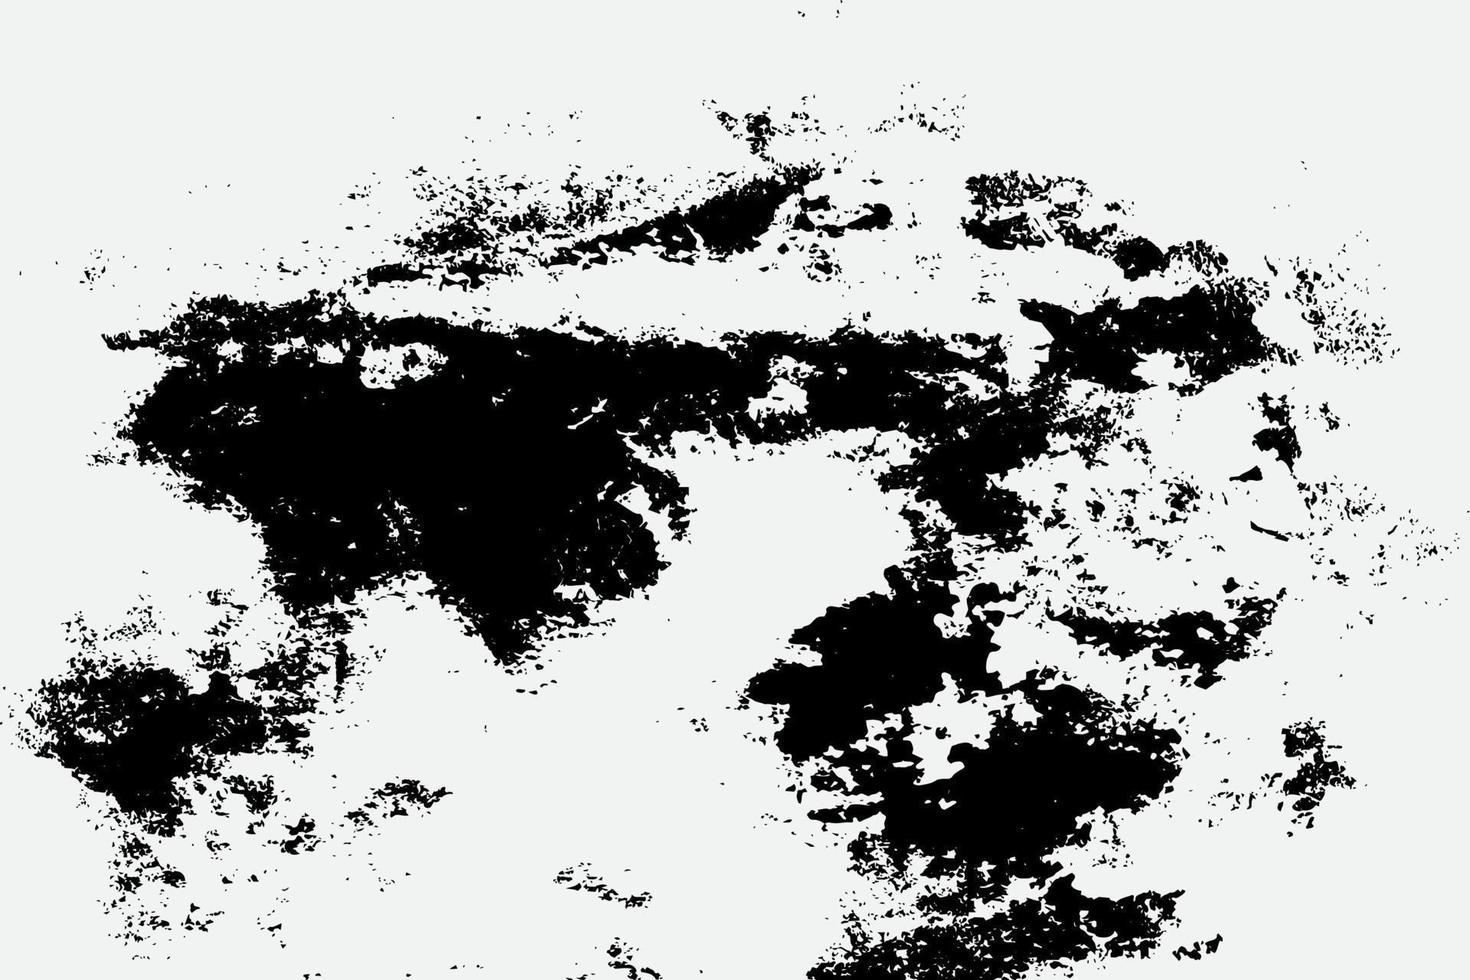 textura preta do grunge no vetor eps do fundo branco